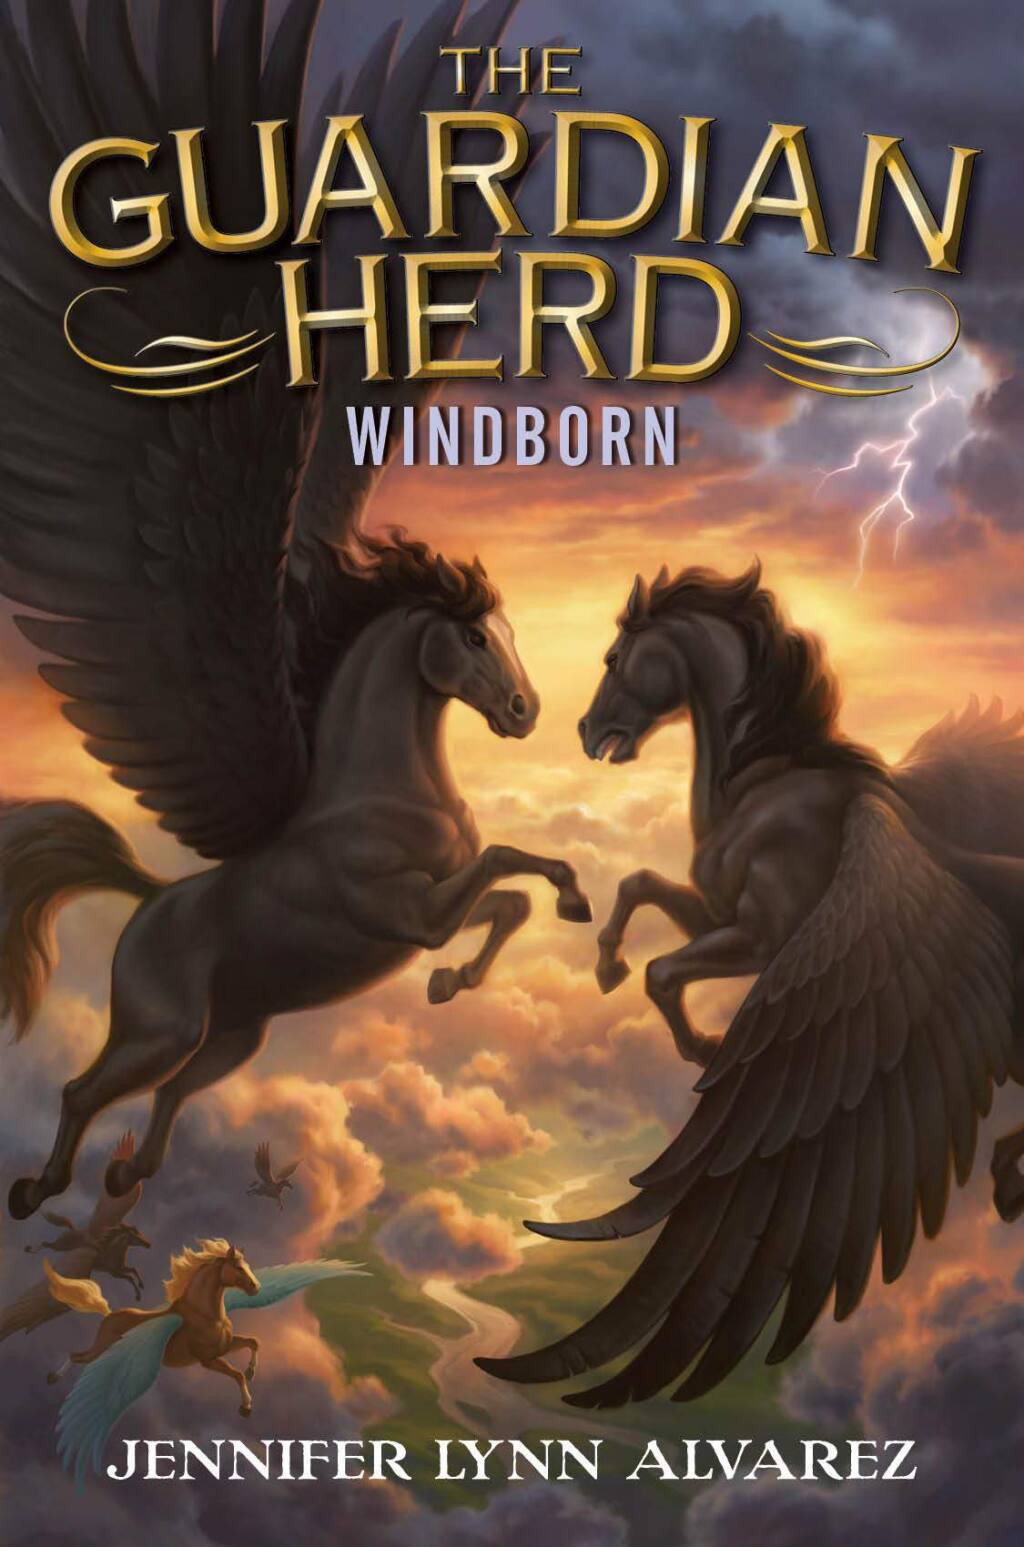 The cover for Jennifer Lynn Alvarez'supcoming fourth book, “WIndborn”